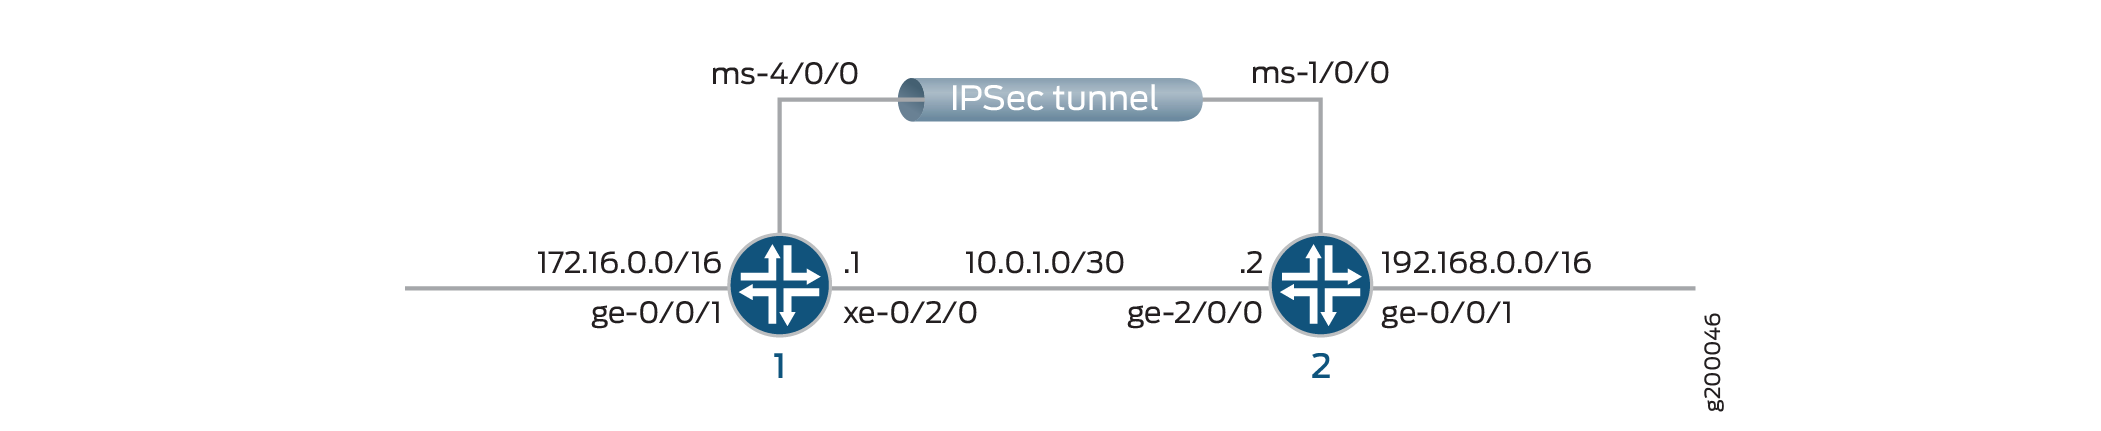 IPsec VPN Tunnel Topology